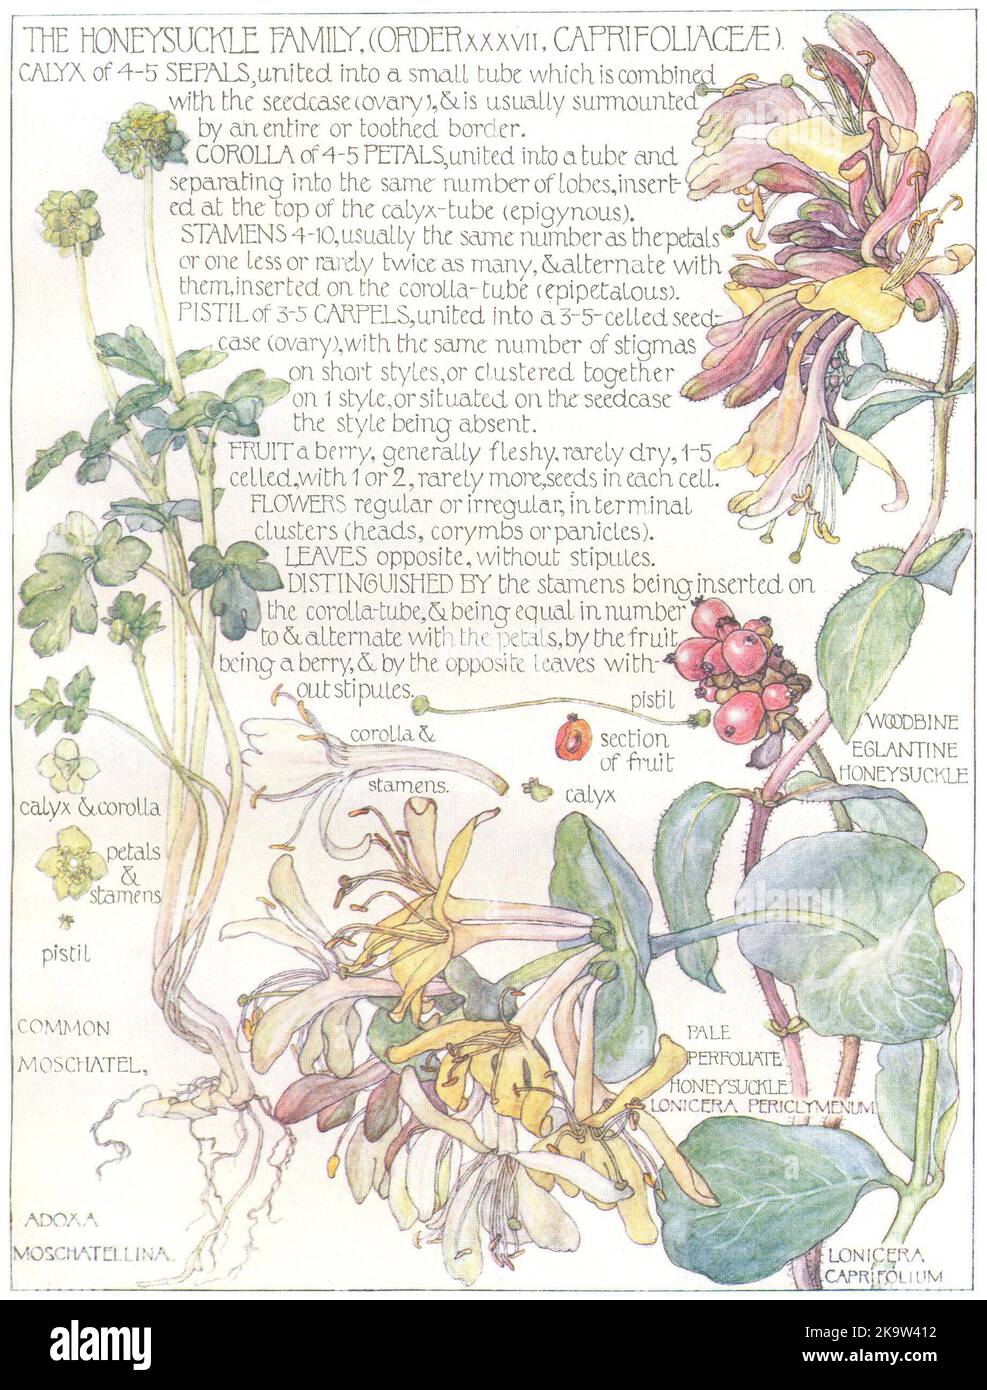 HONEYSUCKLE. Caprifoliaceae.Pale Perfoliate, Woodbine Eglantine Honeysuckle 1907 Stock Photo